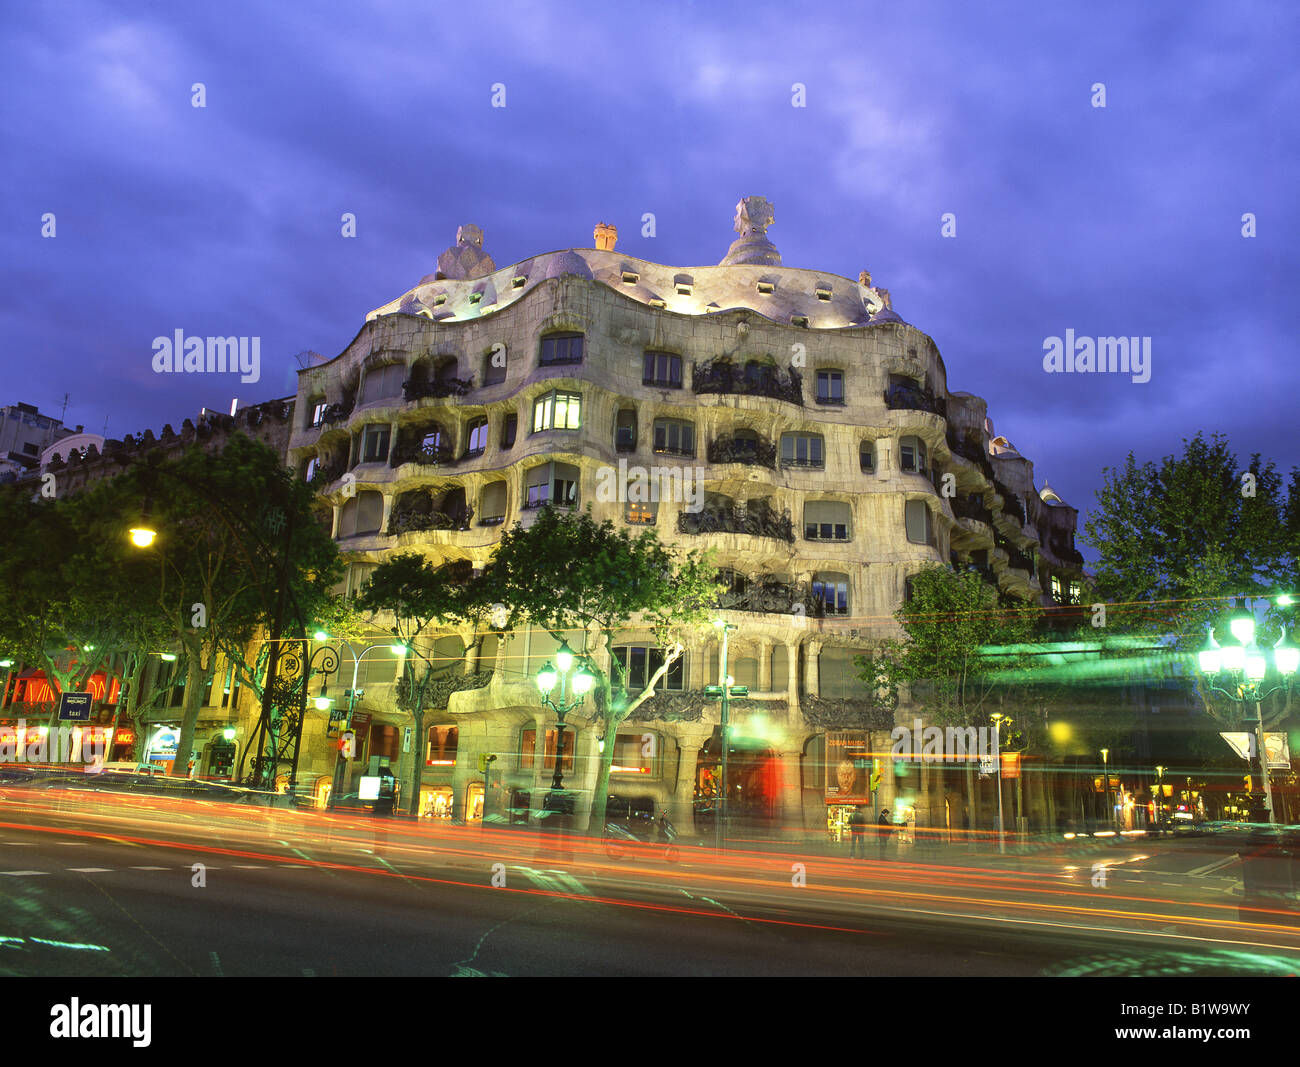 Antoni Gaudi's Casa Mila or La Pedrera building at sunset / night Passeig de Gracia Eixample Barcelona Catalunya Spain Stock Photo